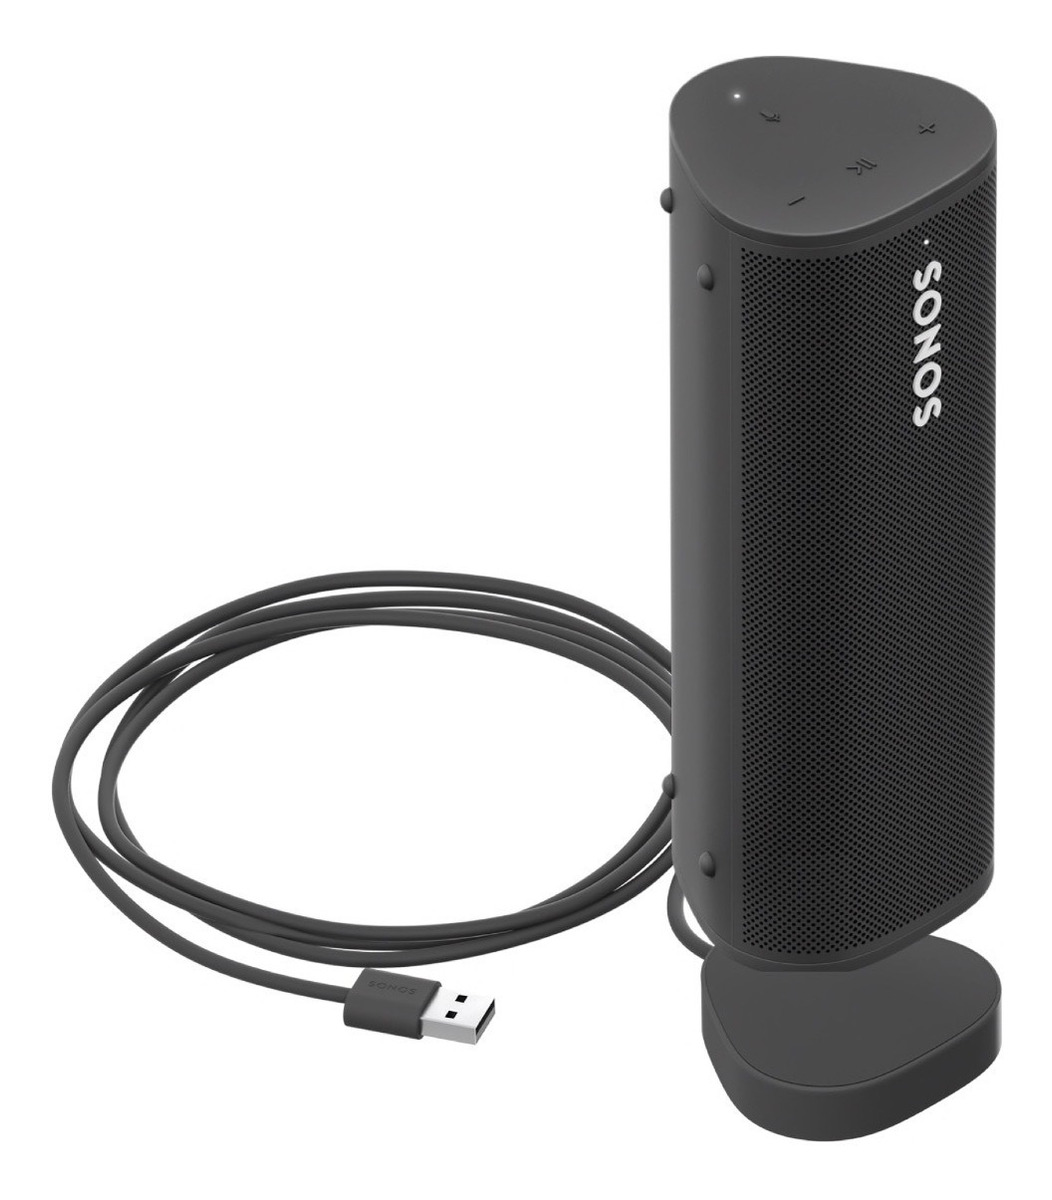 Sonos Roam ワイヤレススピーカー2台と専用充電器2台 - スピーカー